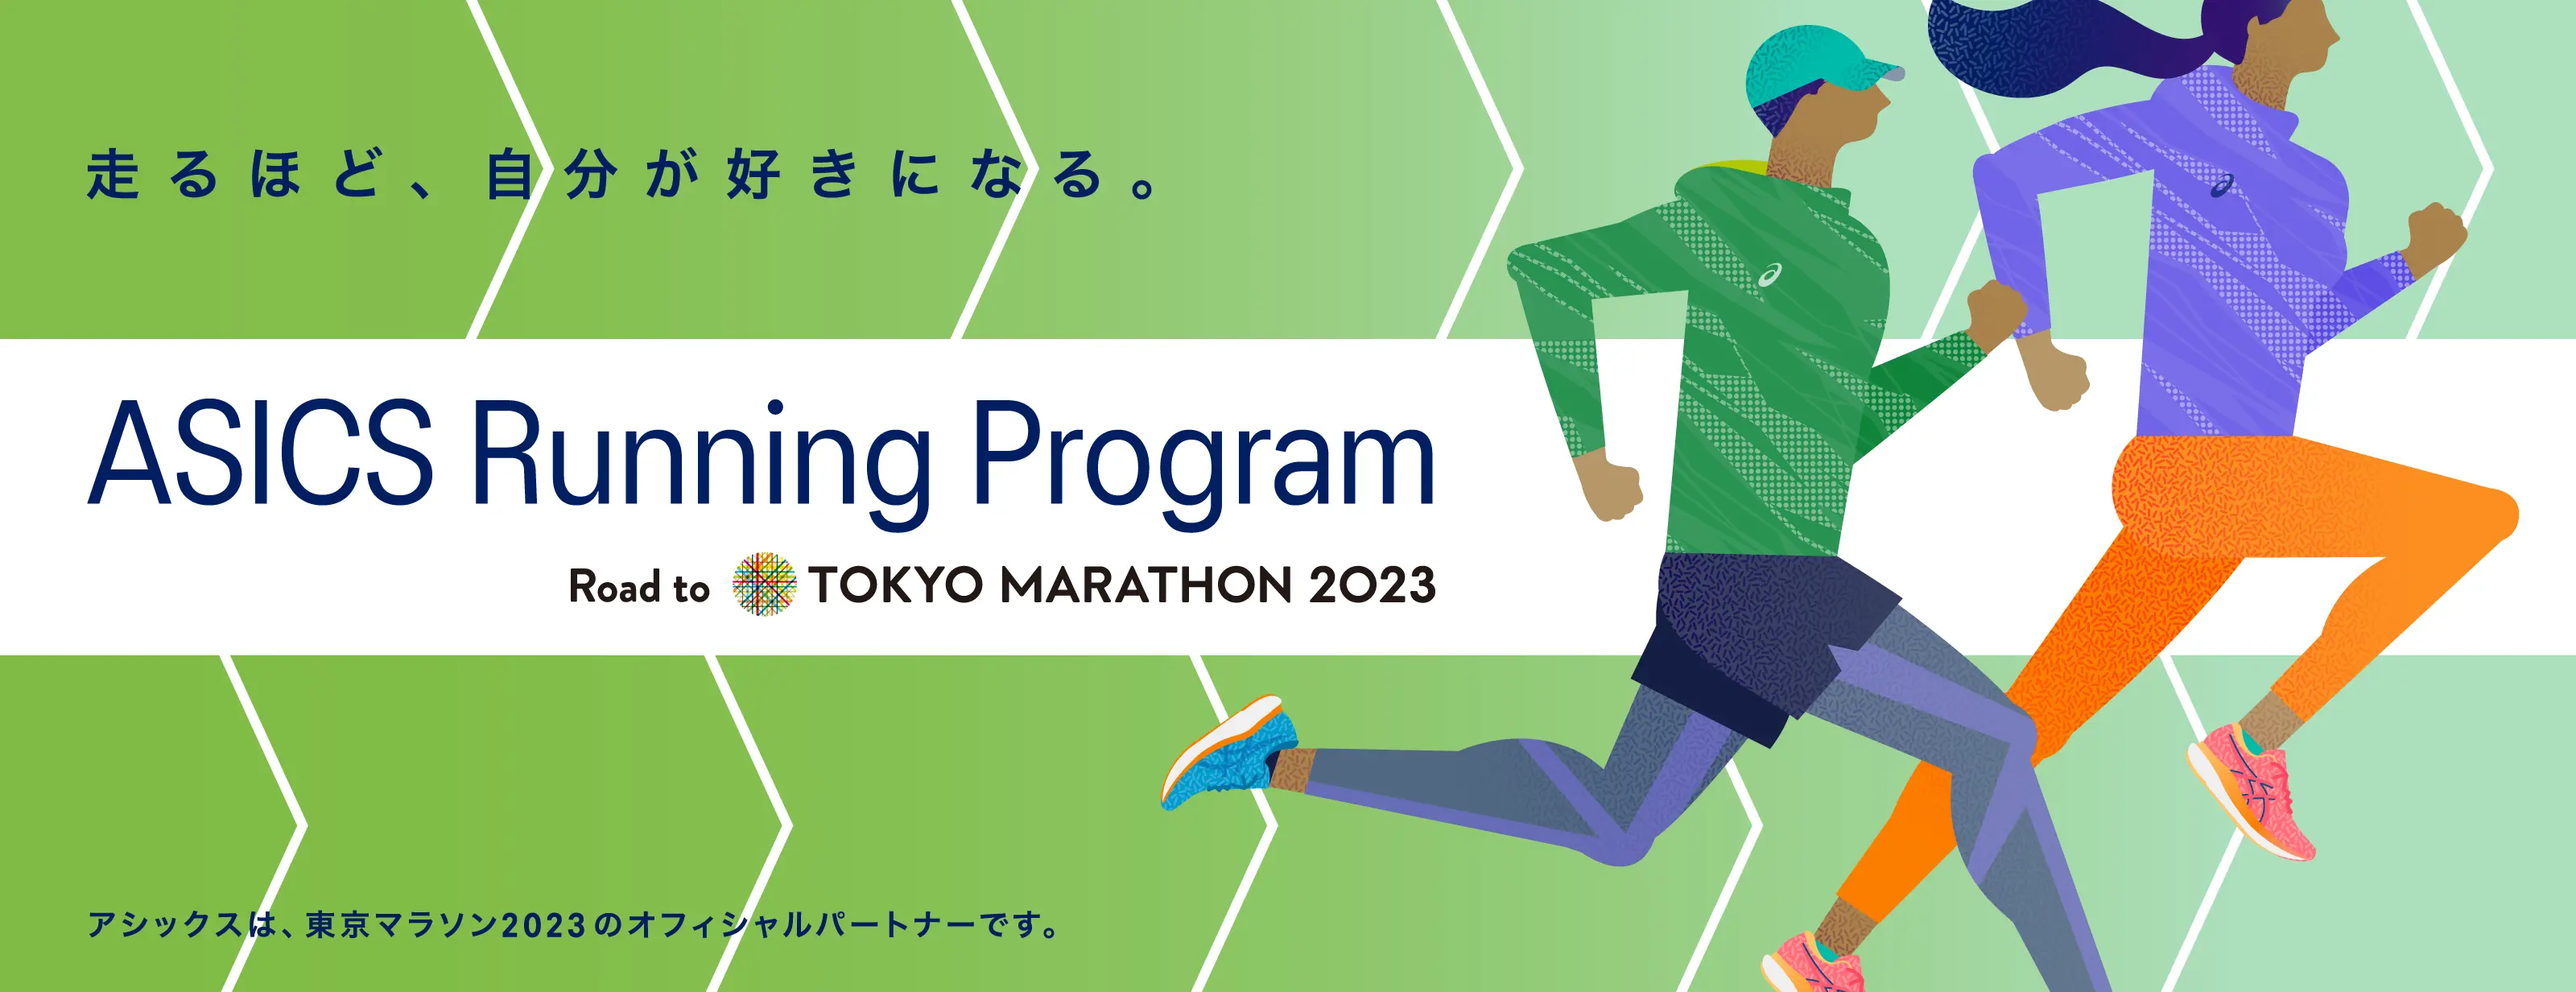 ASICS Running Program Road to tokyo marathon 2023